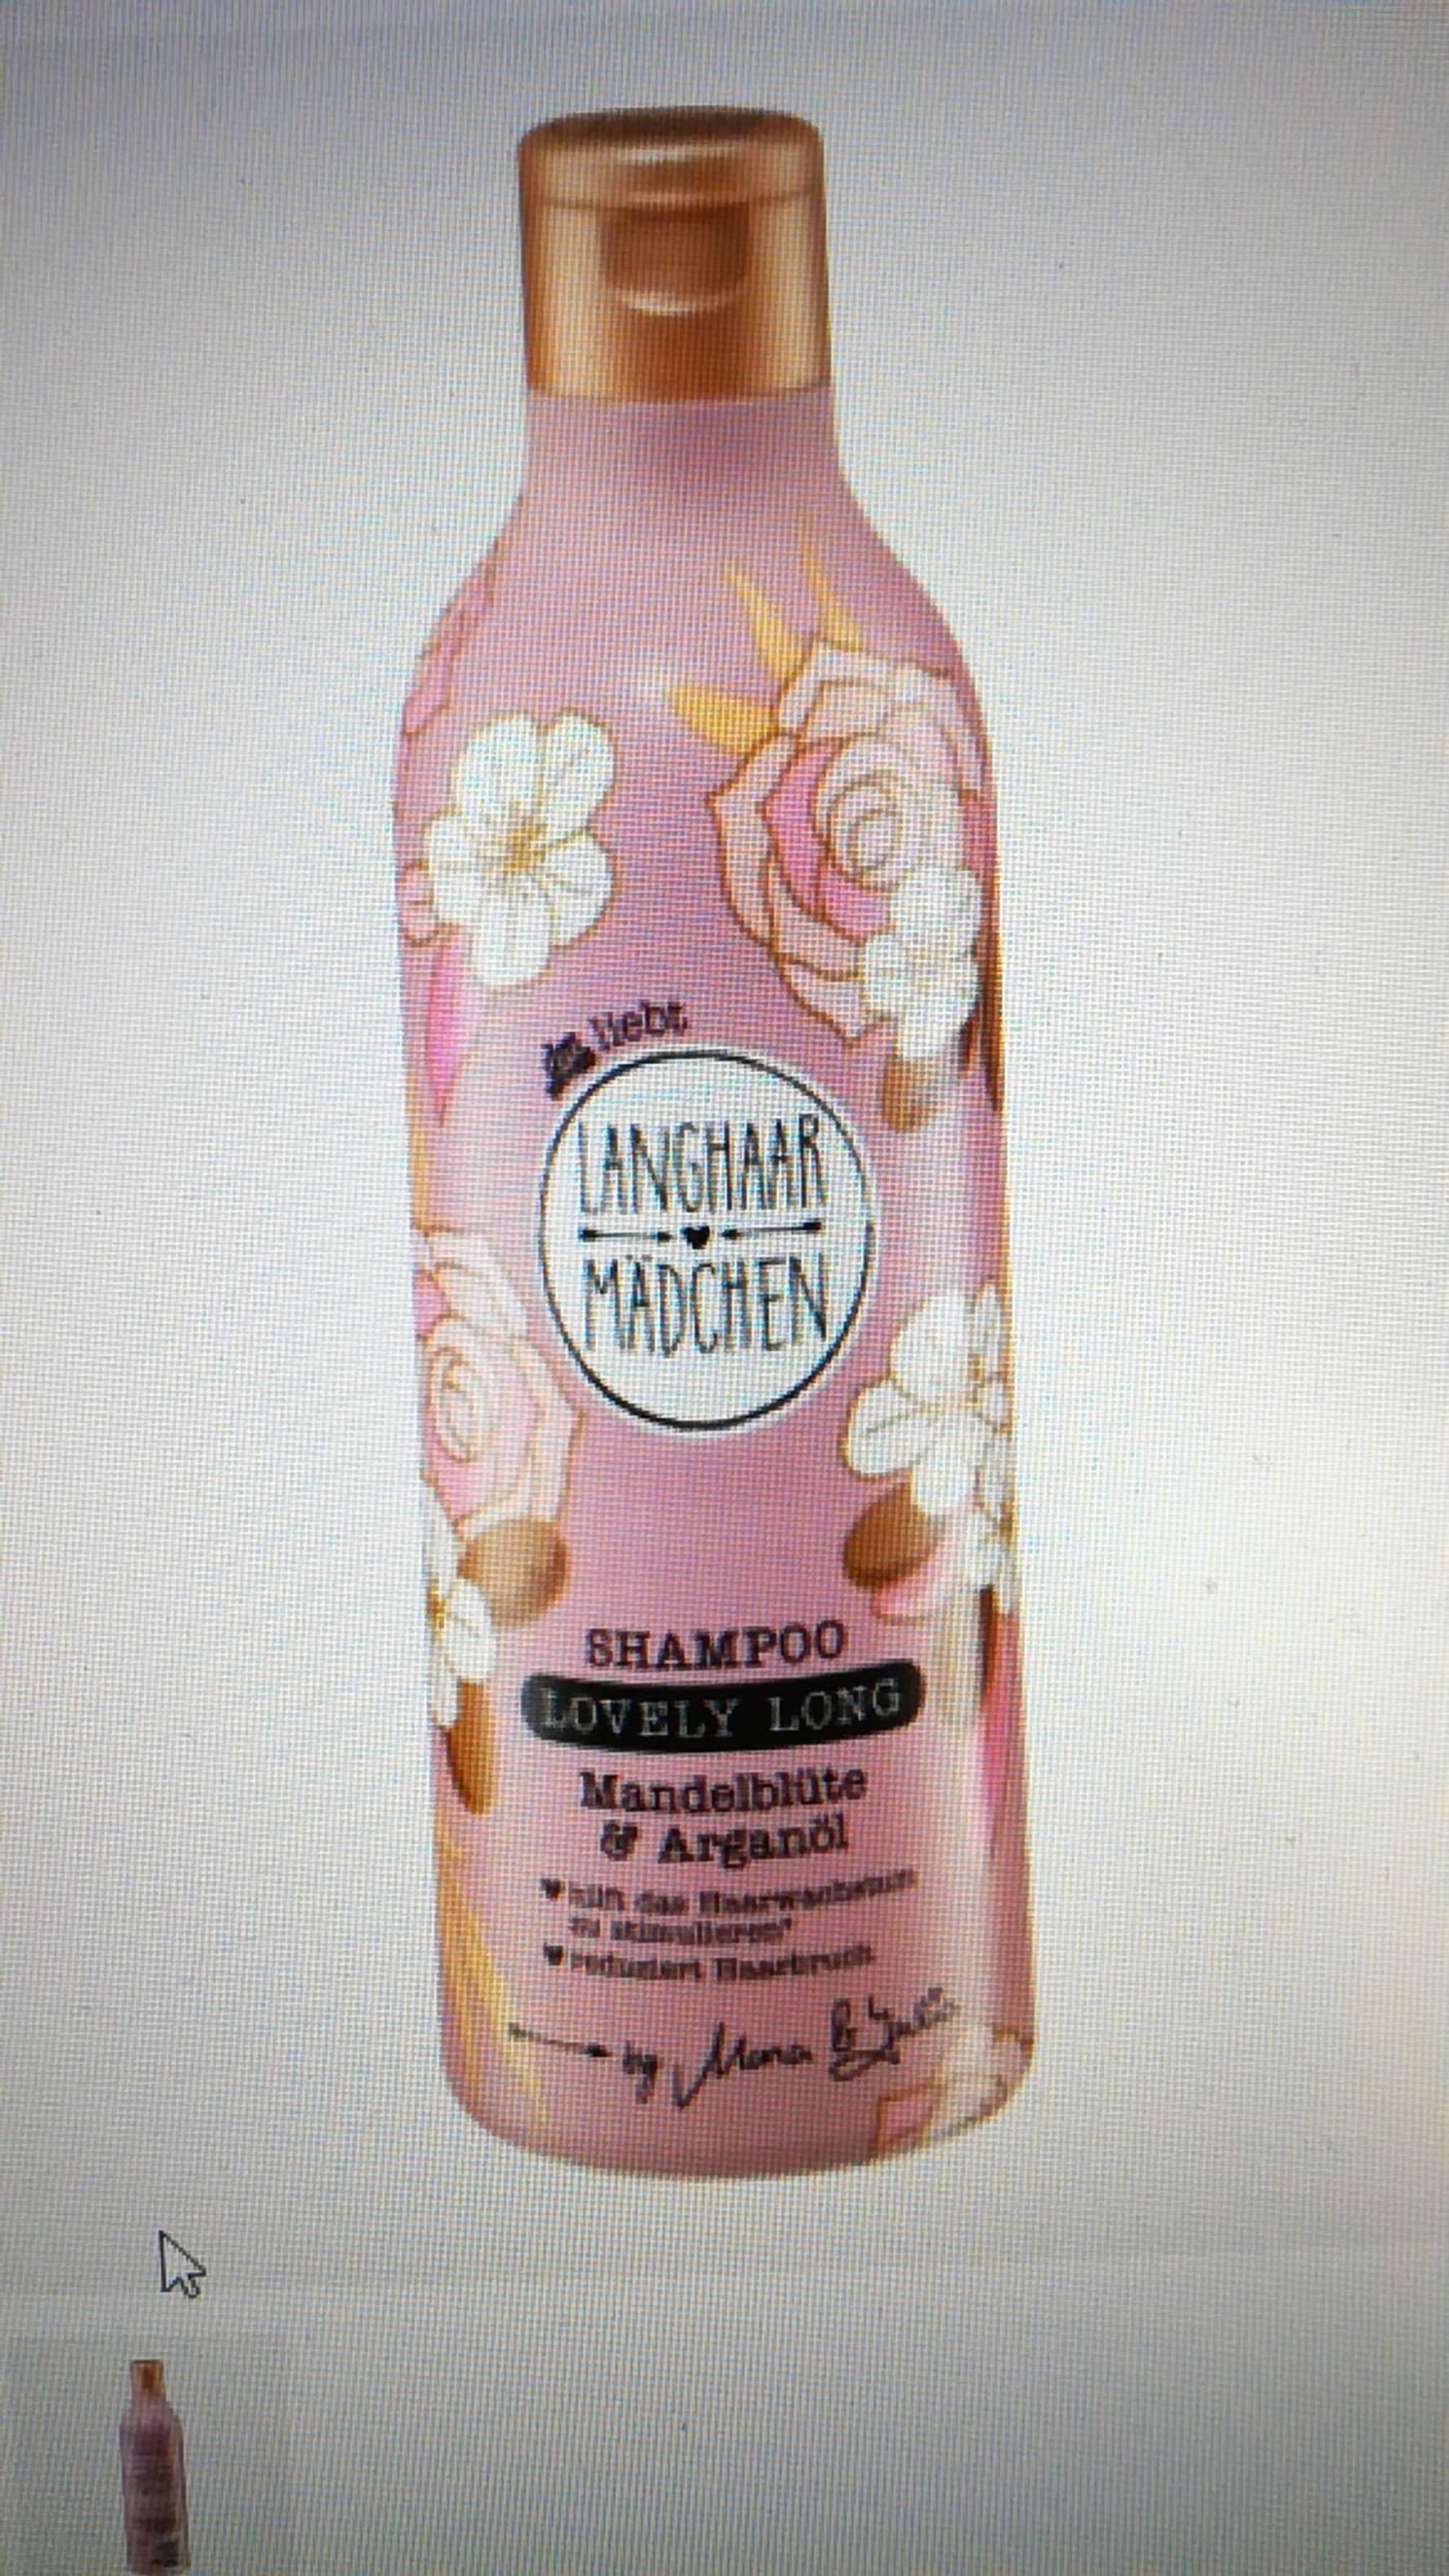 LANGHAAR MADCHEN - Shampoo lovely long - Mandelblüte & Arganöl